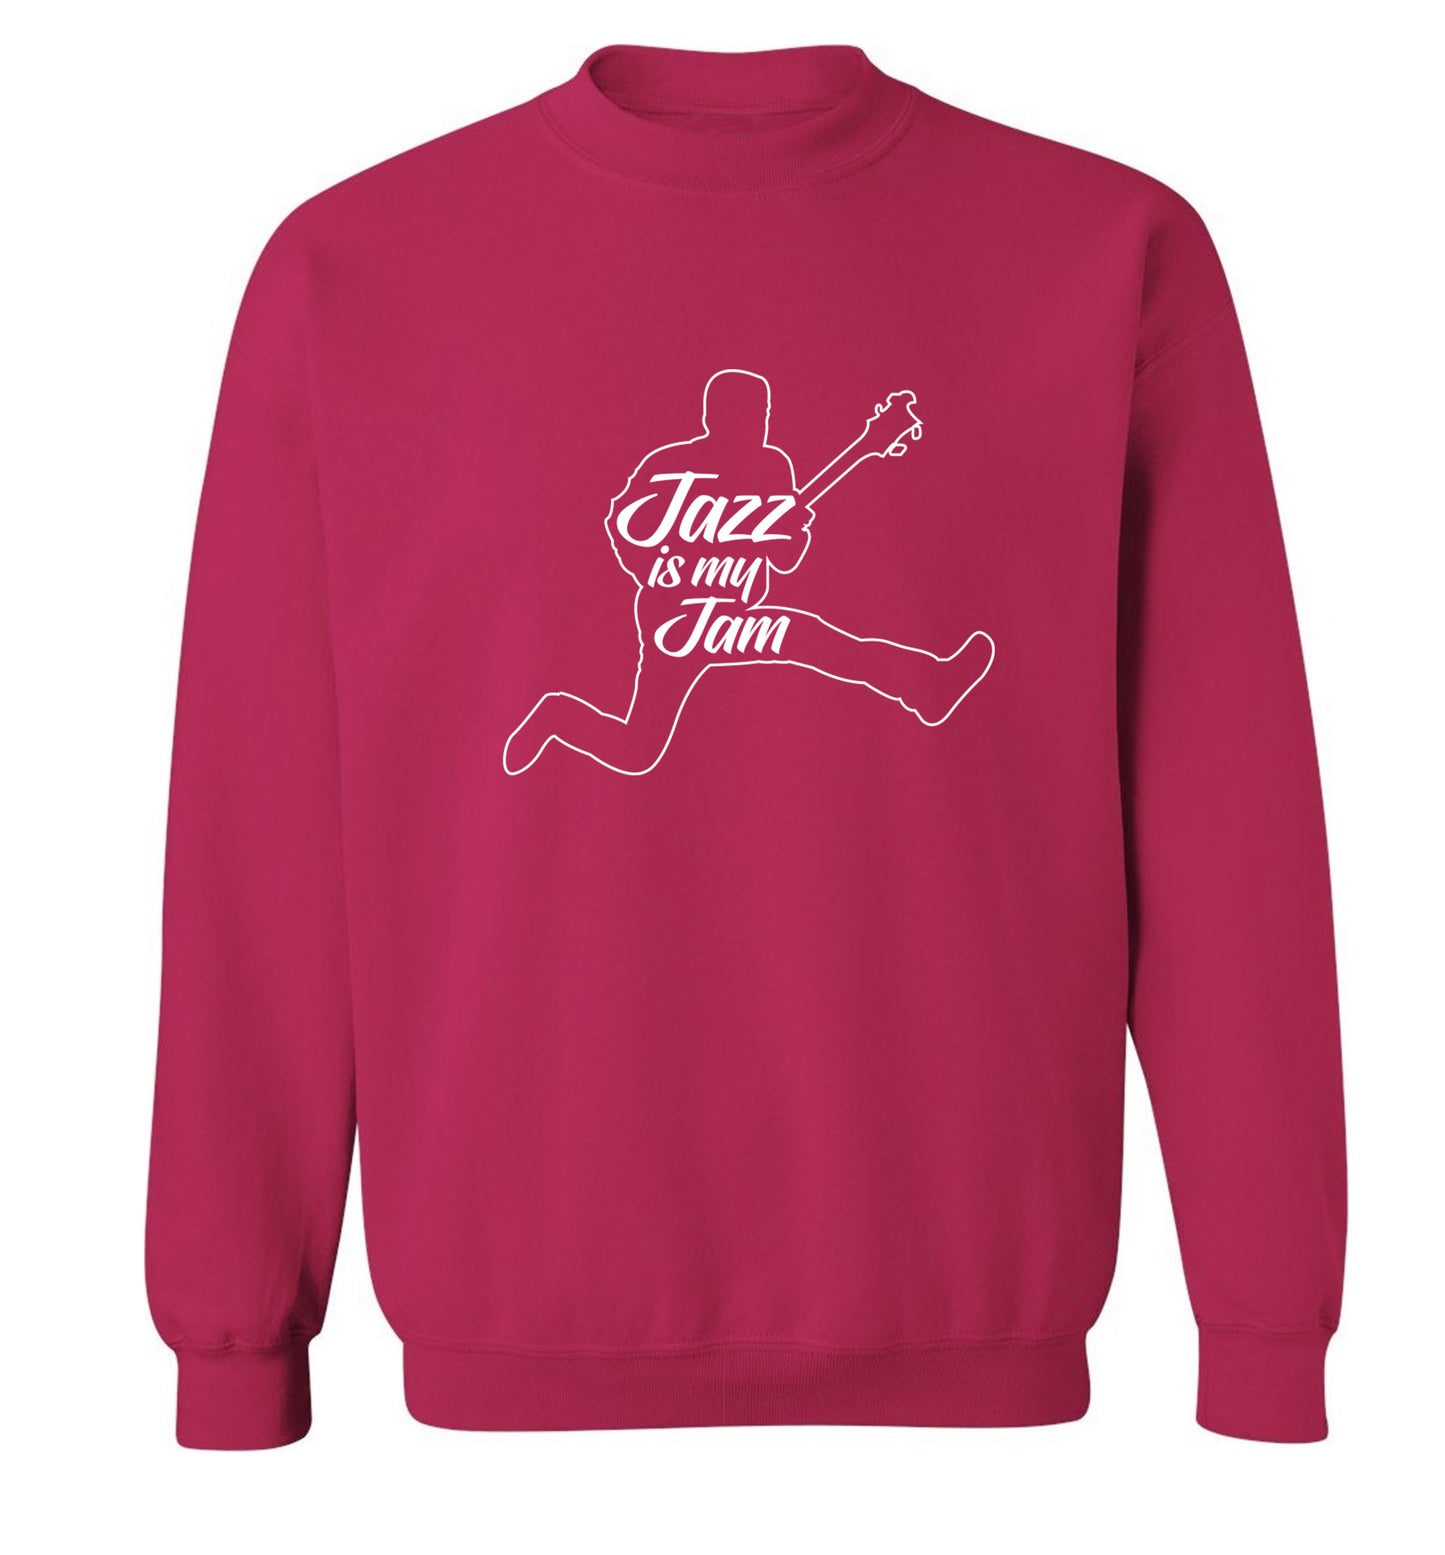 Jazz is my jam Adult's unisex pink Sweater 2XL